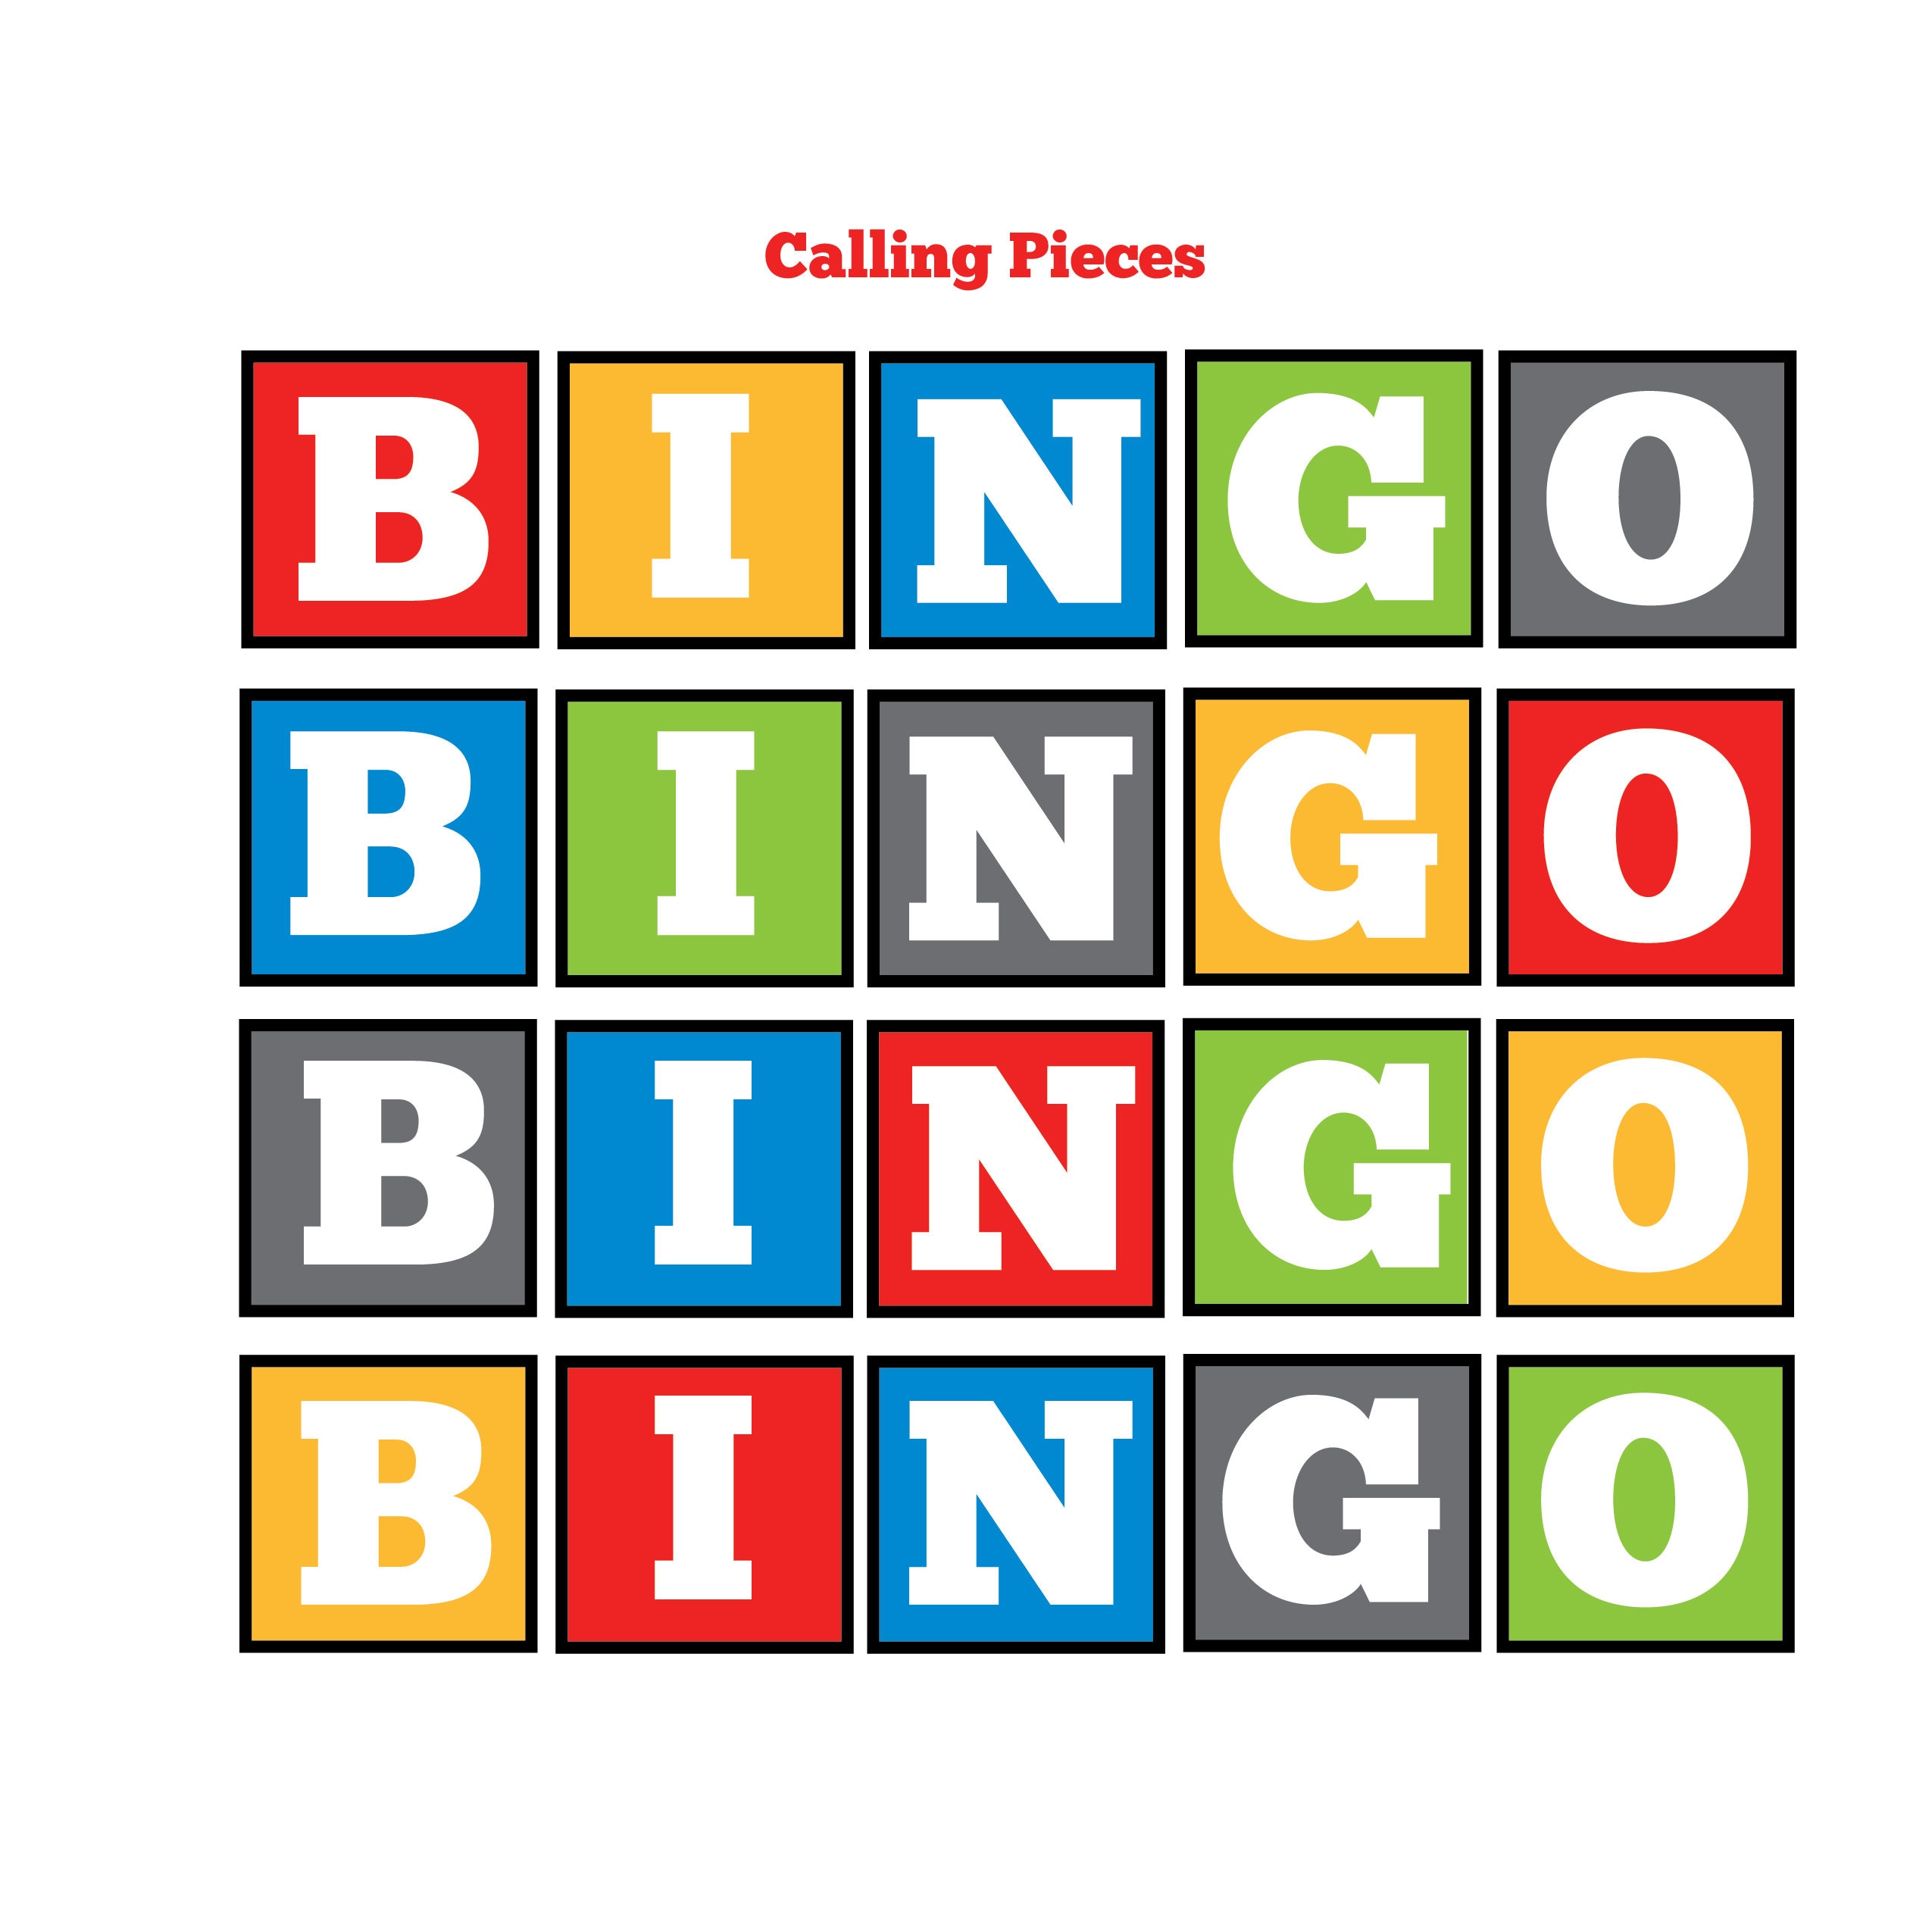 pirate-bingo-free-printable-printable-form-templates-and-letter